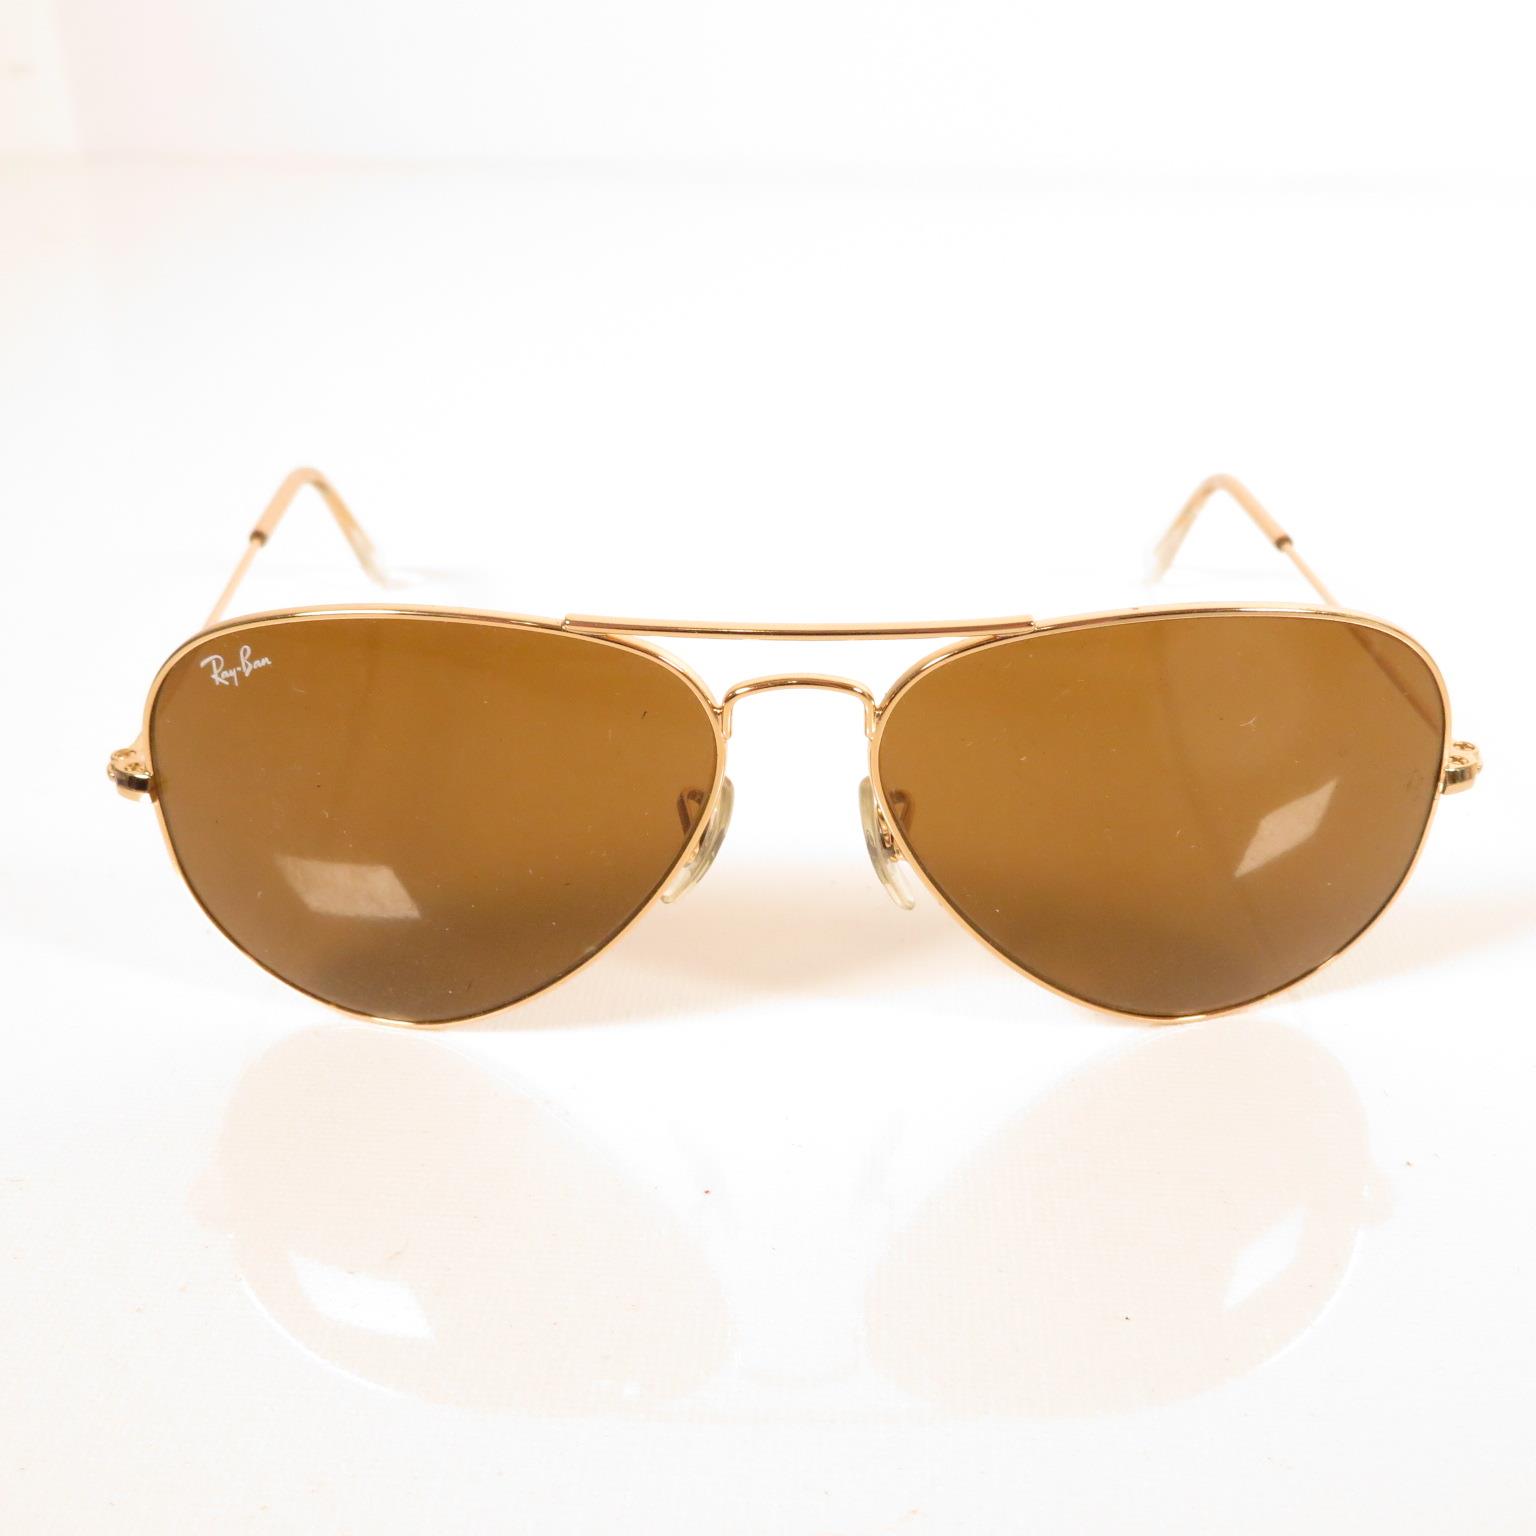 4x boxed Ray Ban sunglasses and 4x loose Ray Ban sunglasses - - Bild 2 aus 16